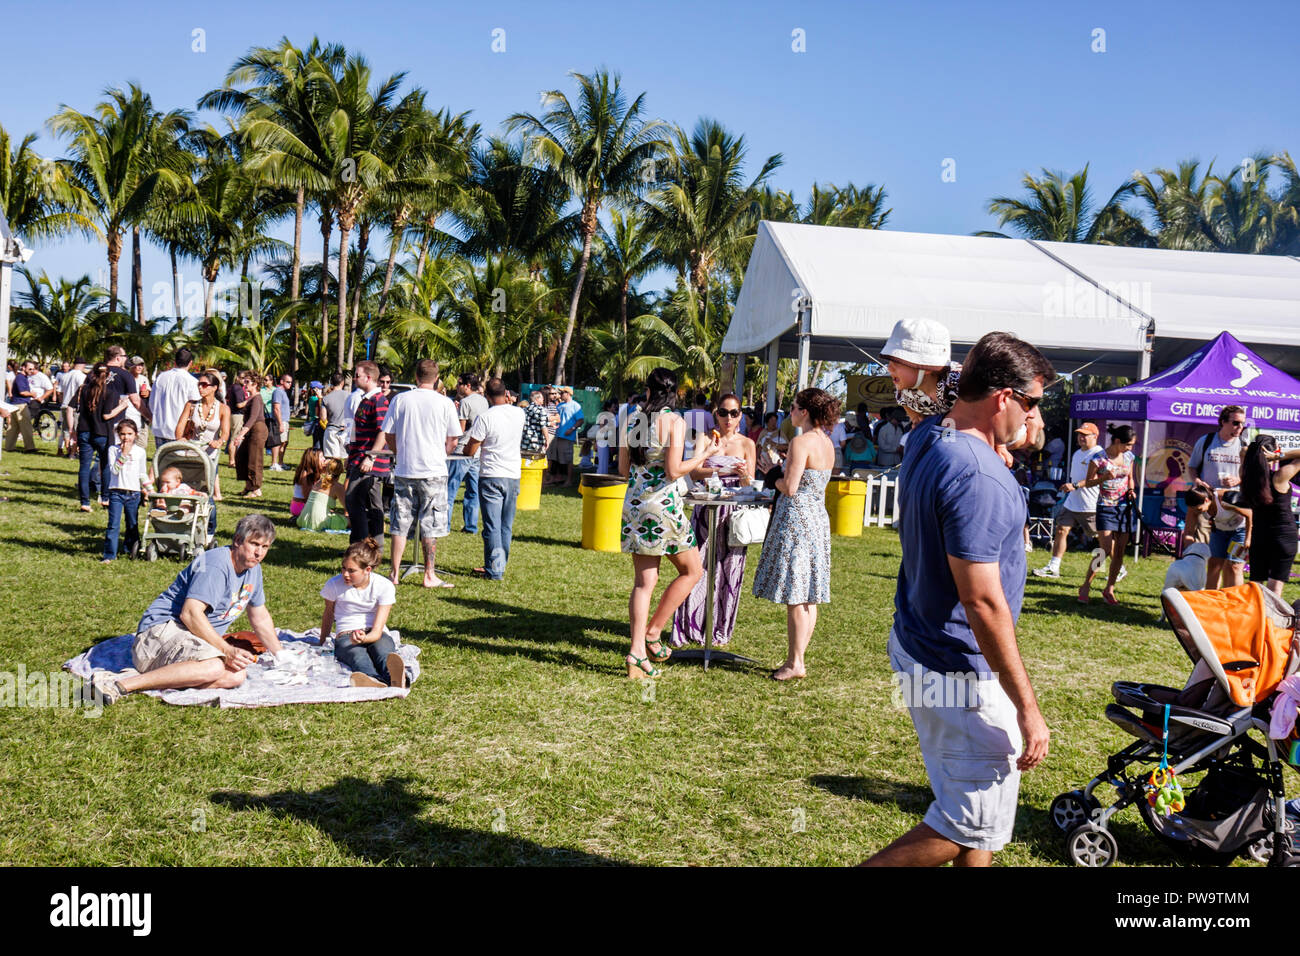 Miami Florida,Coconut Grove,Peacock Park,Great Taste of the Grove,community food Festival,festivals fair,taste,tasting,Hispanic men,women,singles,fami Stock Photo